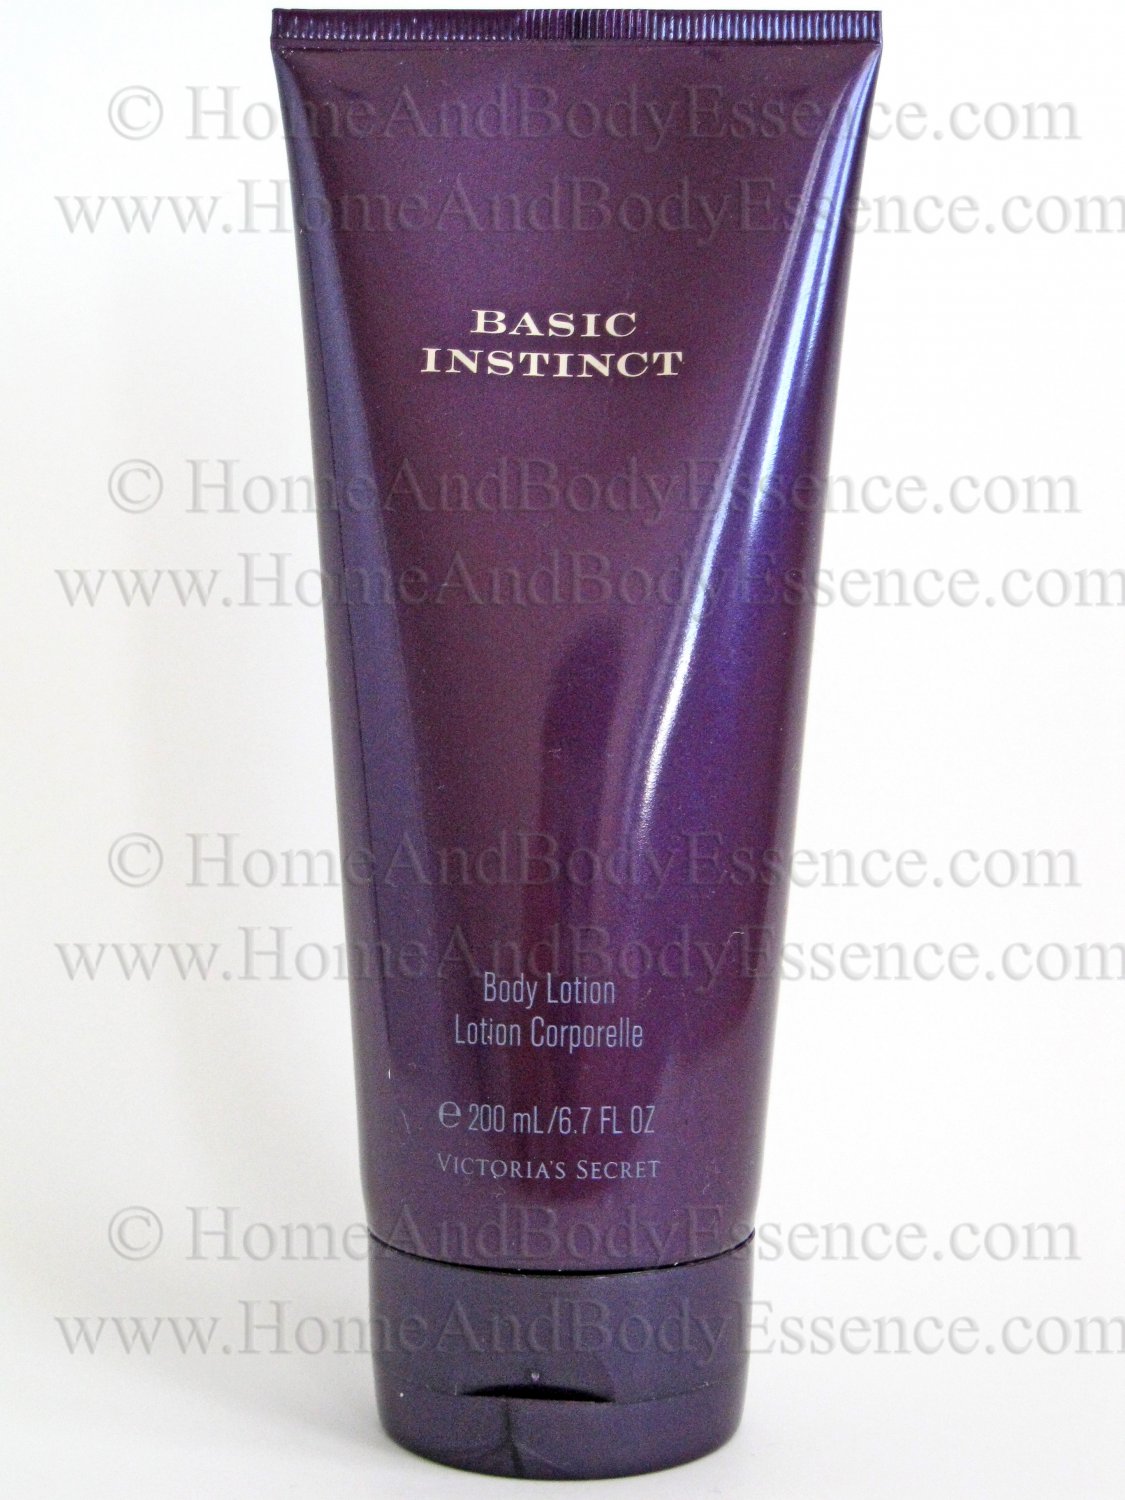 Victoria's Secret Basic Instinct Lotion Perfumed Fragrance Scented Body